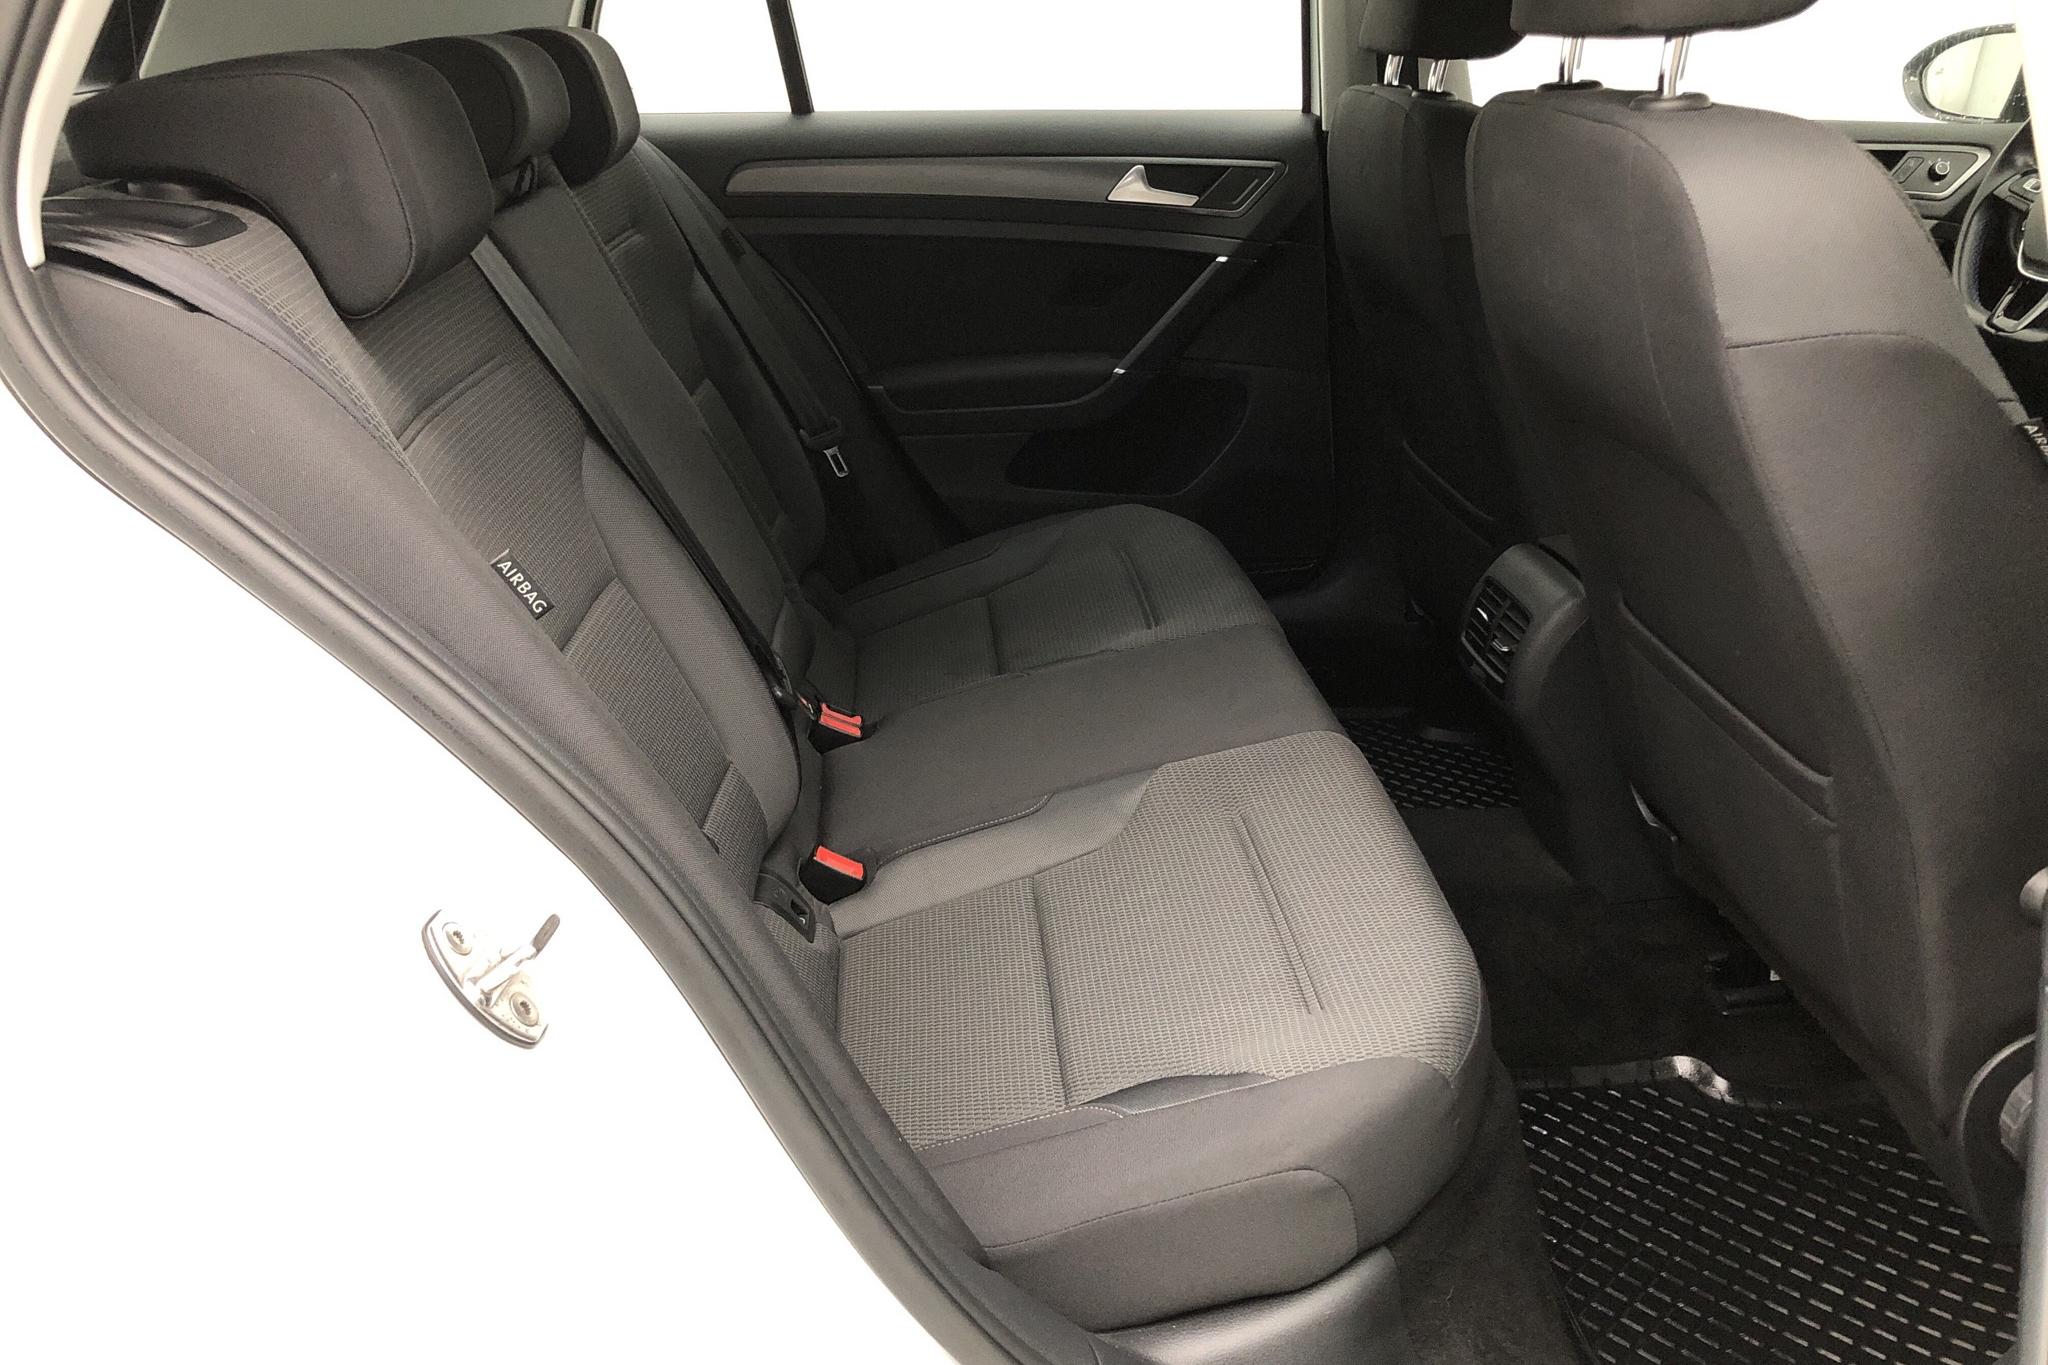 VW e-Golf VII 5dr (136hk) - 36 860 km - Automatic - white - 2019